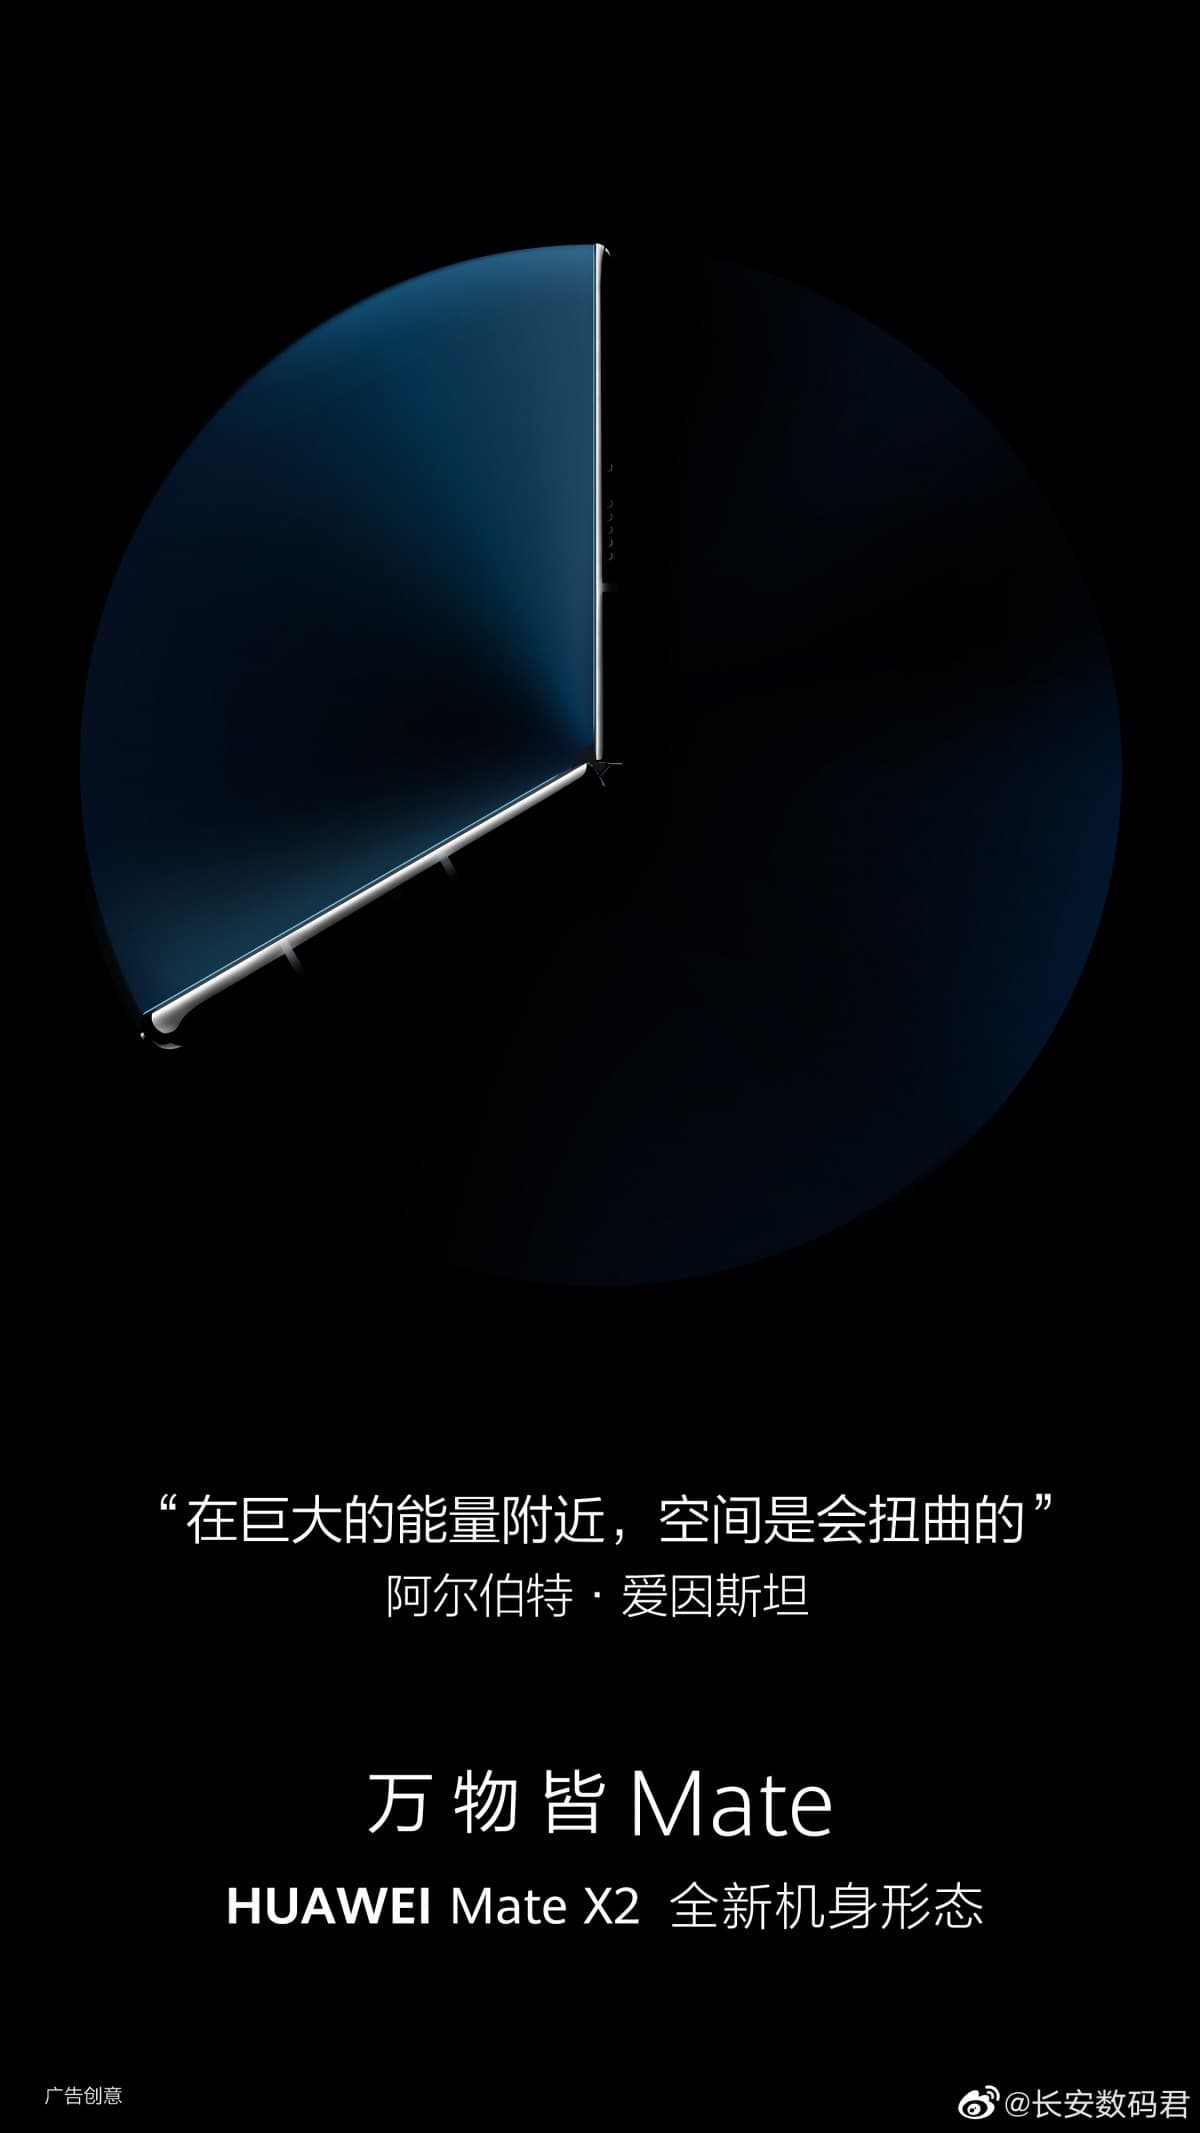 Kifele helyett befelé hajlik a Huawei Mate X2